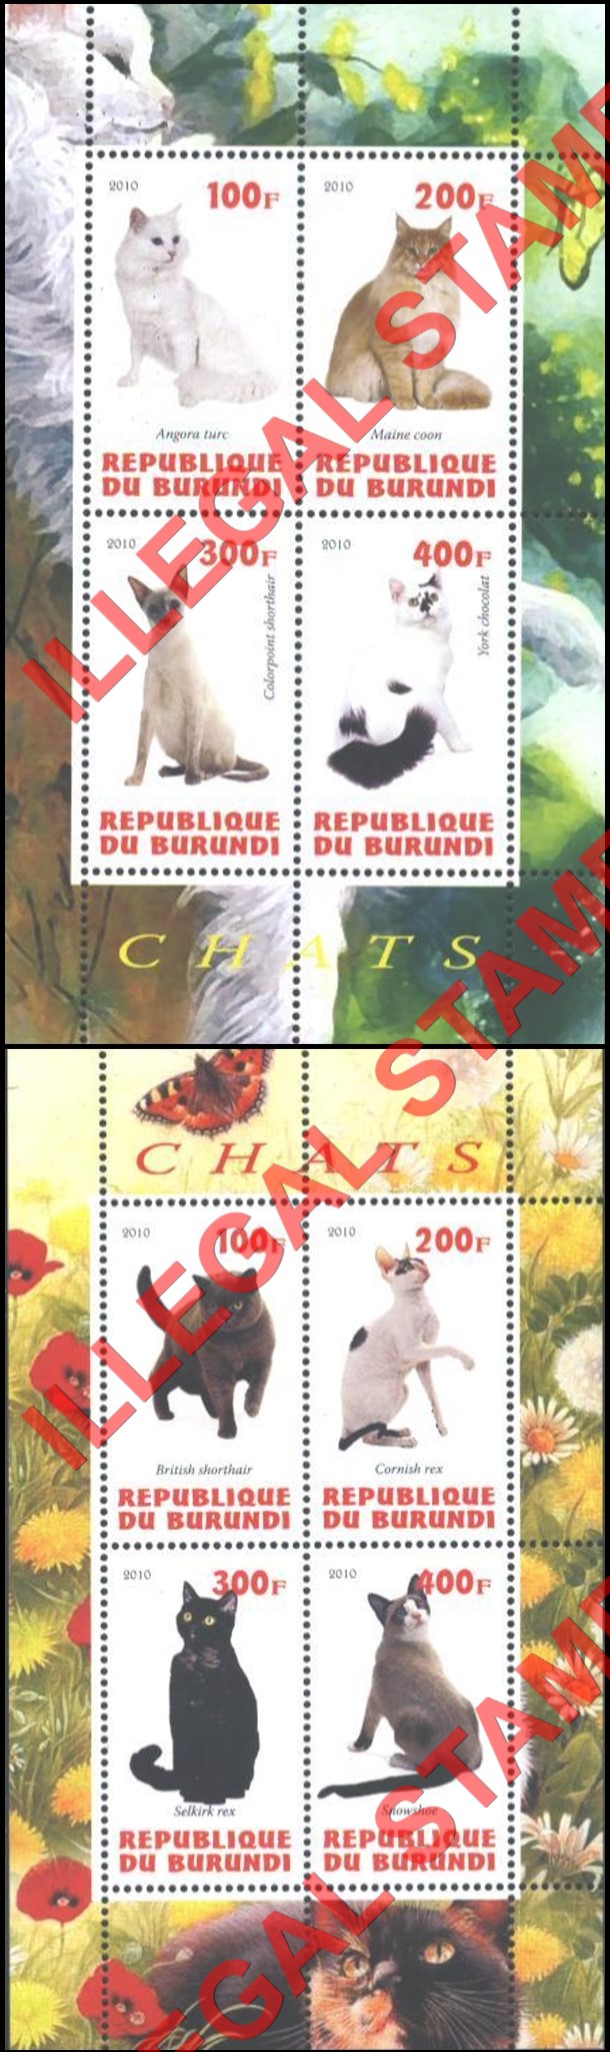 Burundi 2010 Cats Counterfeit Illegal Stamp Souvenir Sheets of 4 (Part 1)